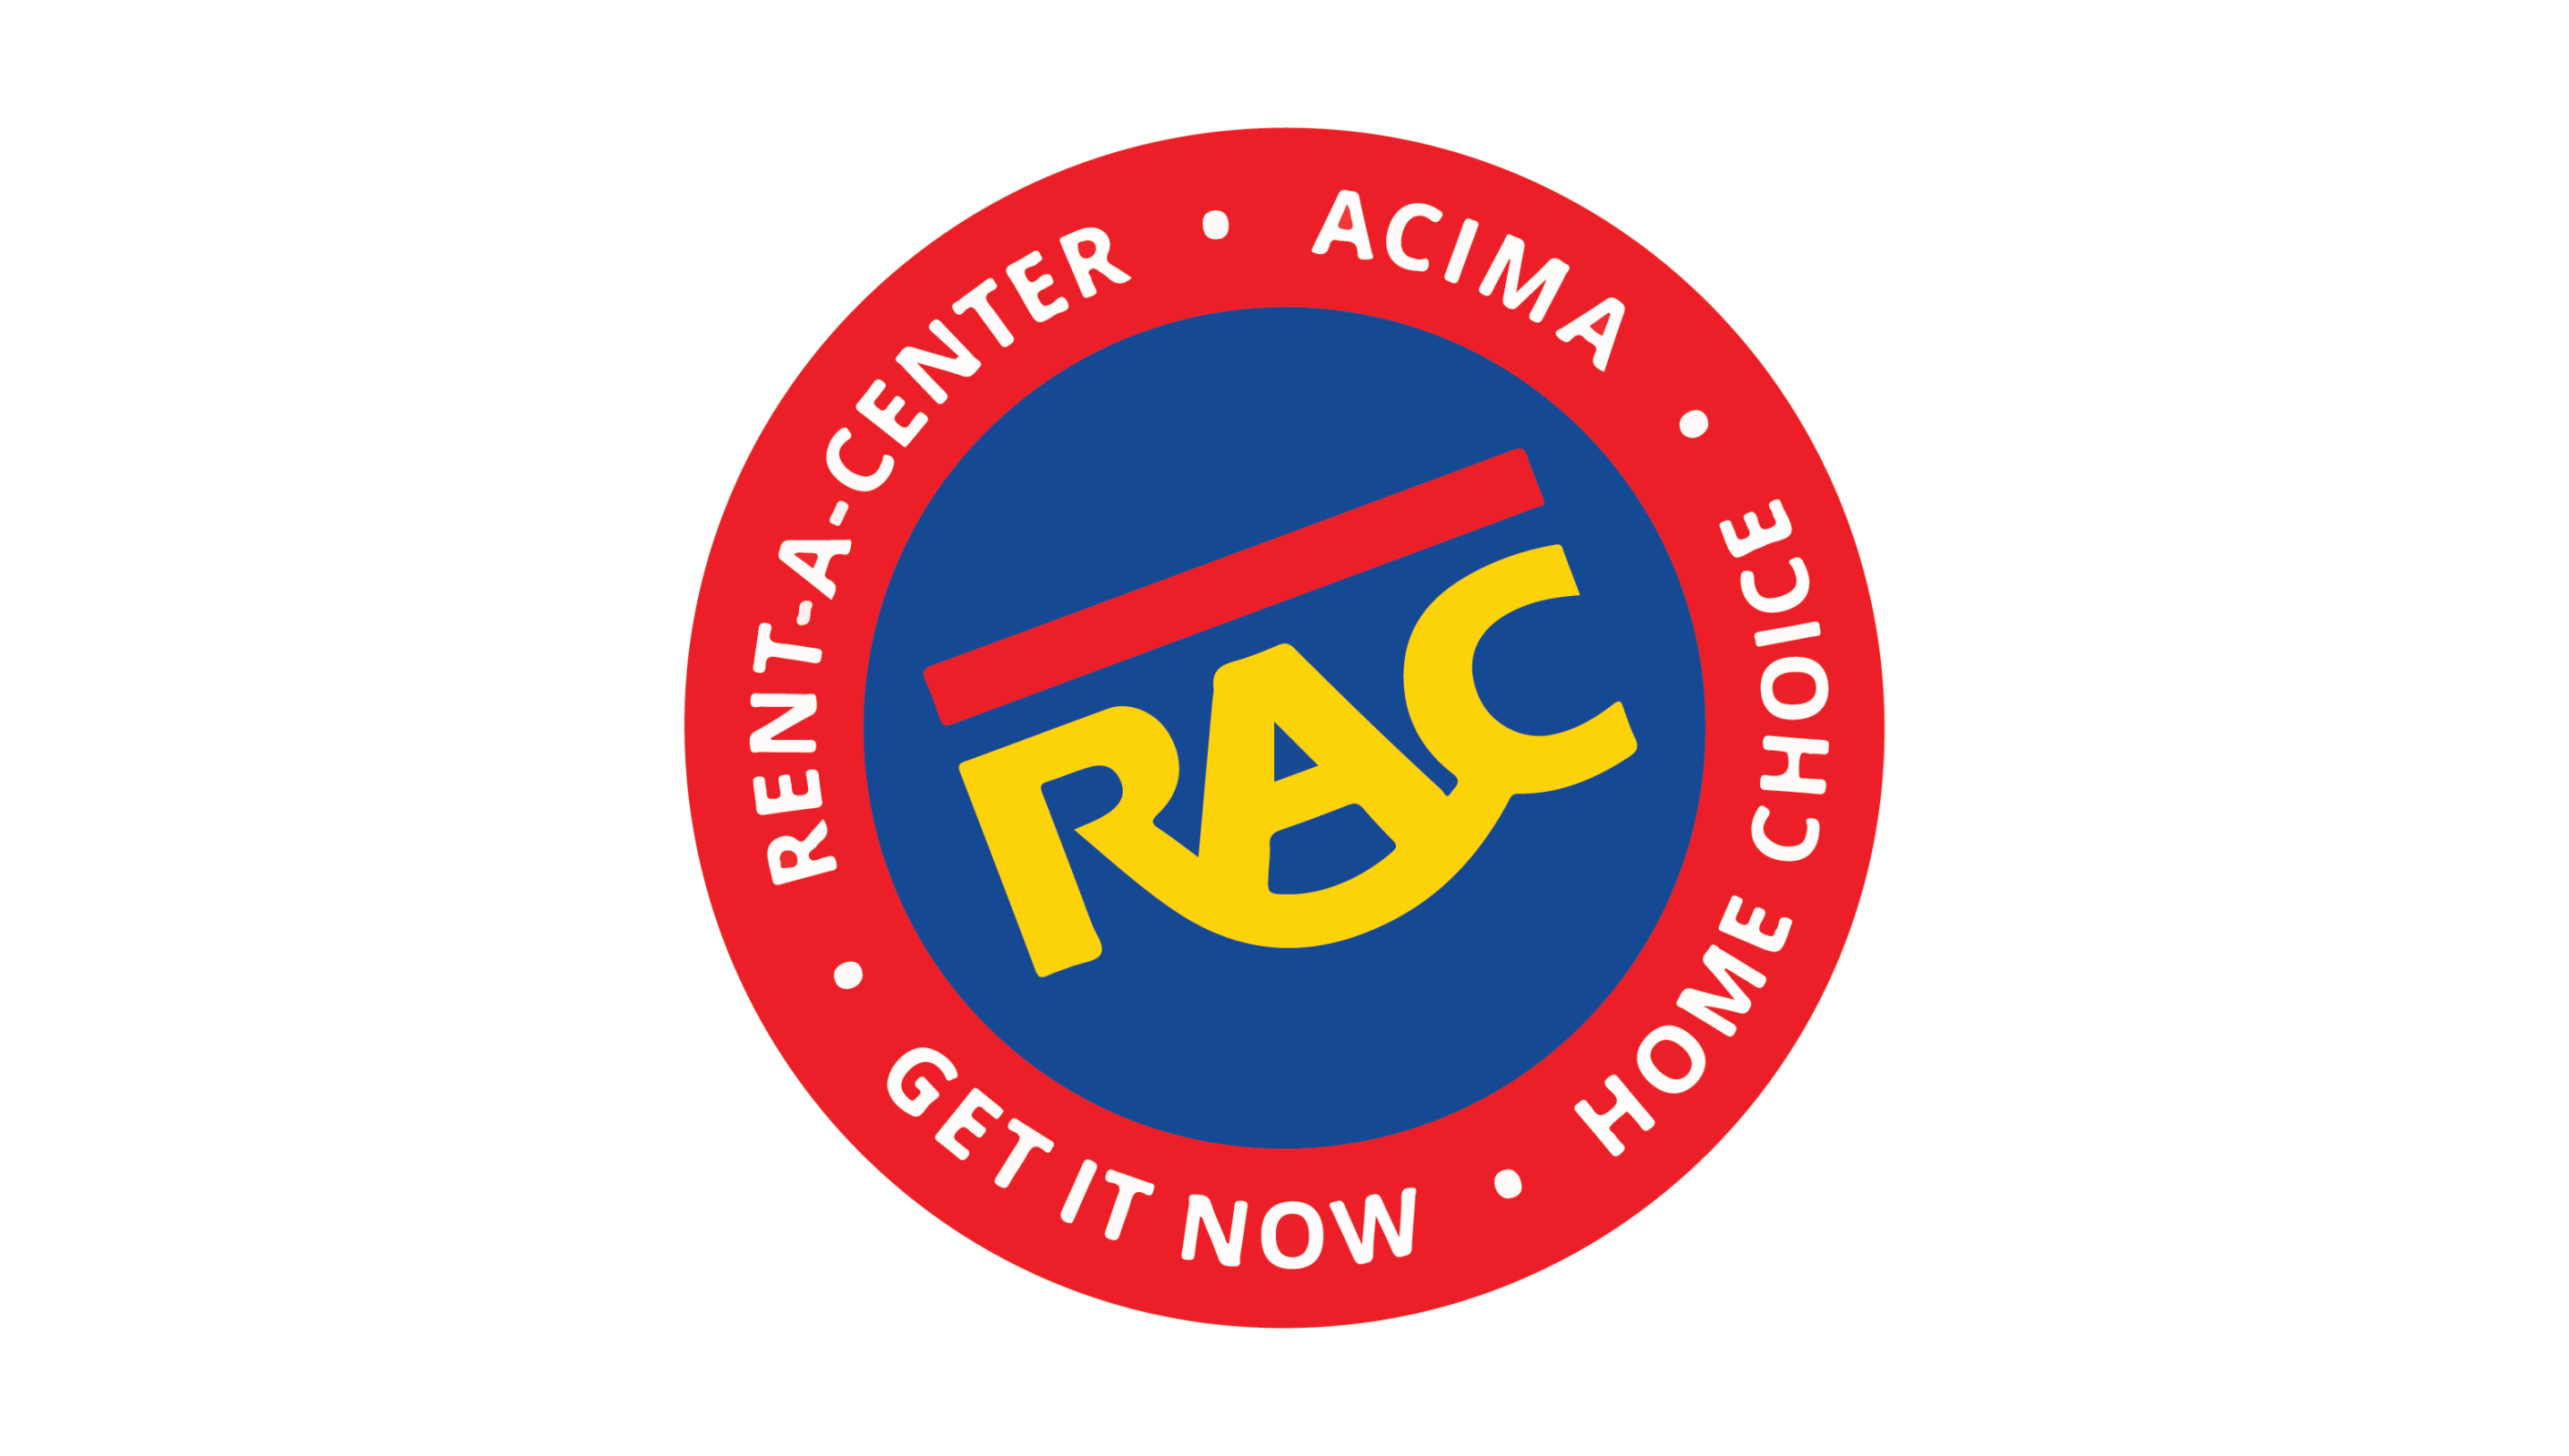 Rent A Center - Rent-to-own merchandise's Logo